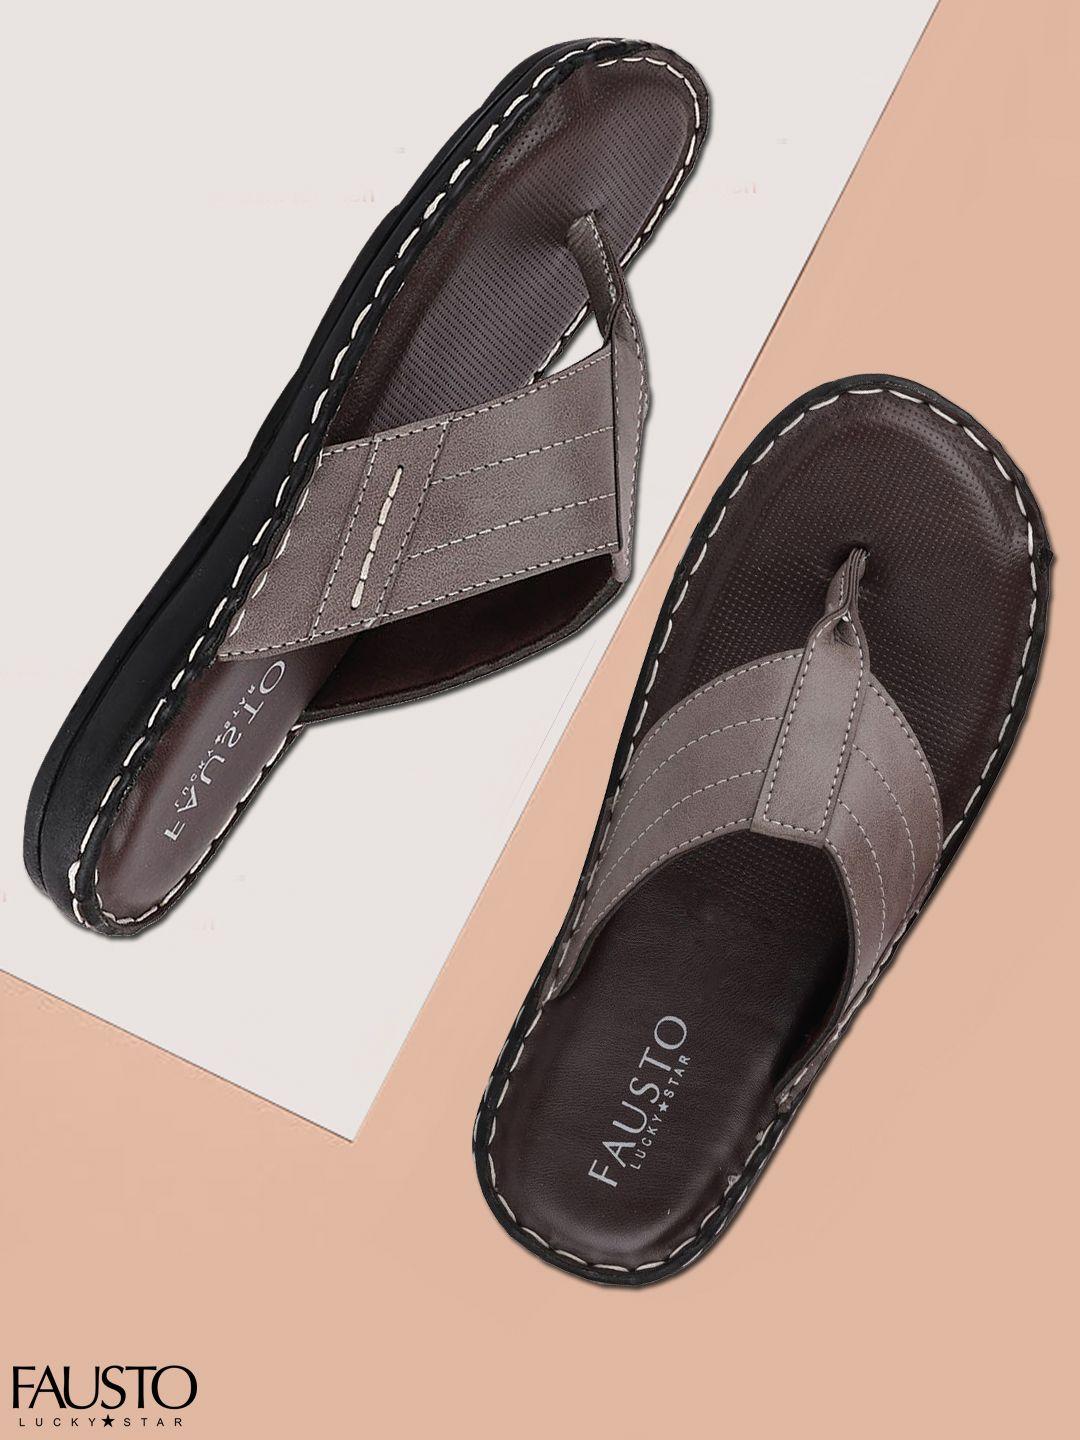 fausto-men-olive-brown-comfort-sandals